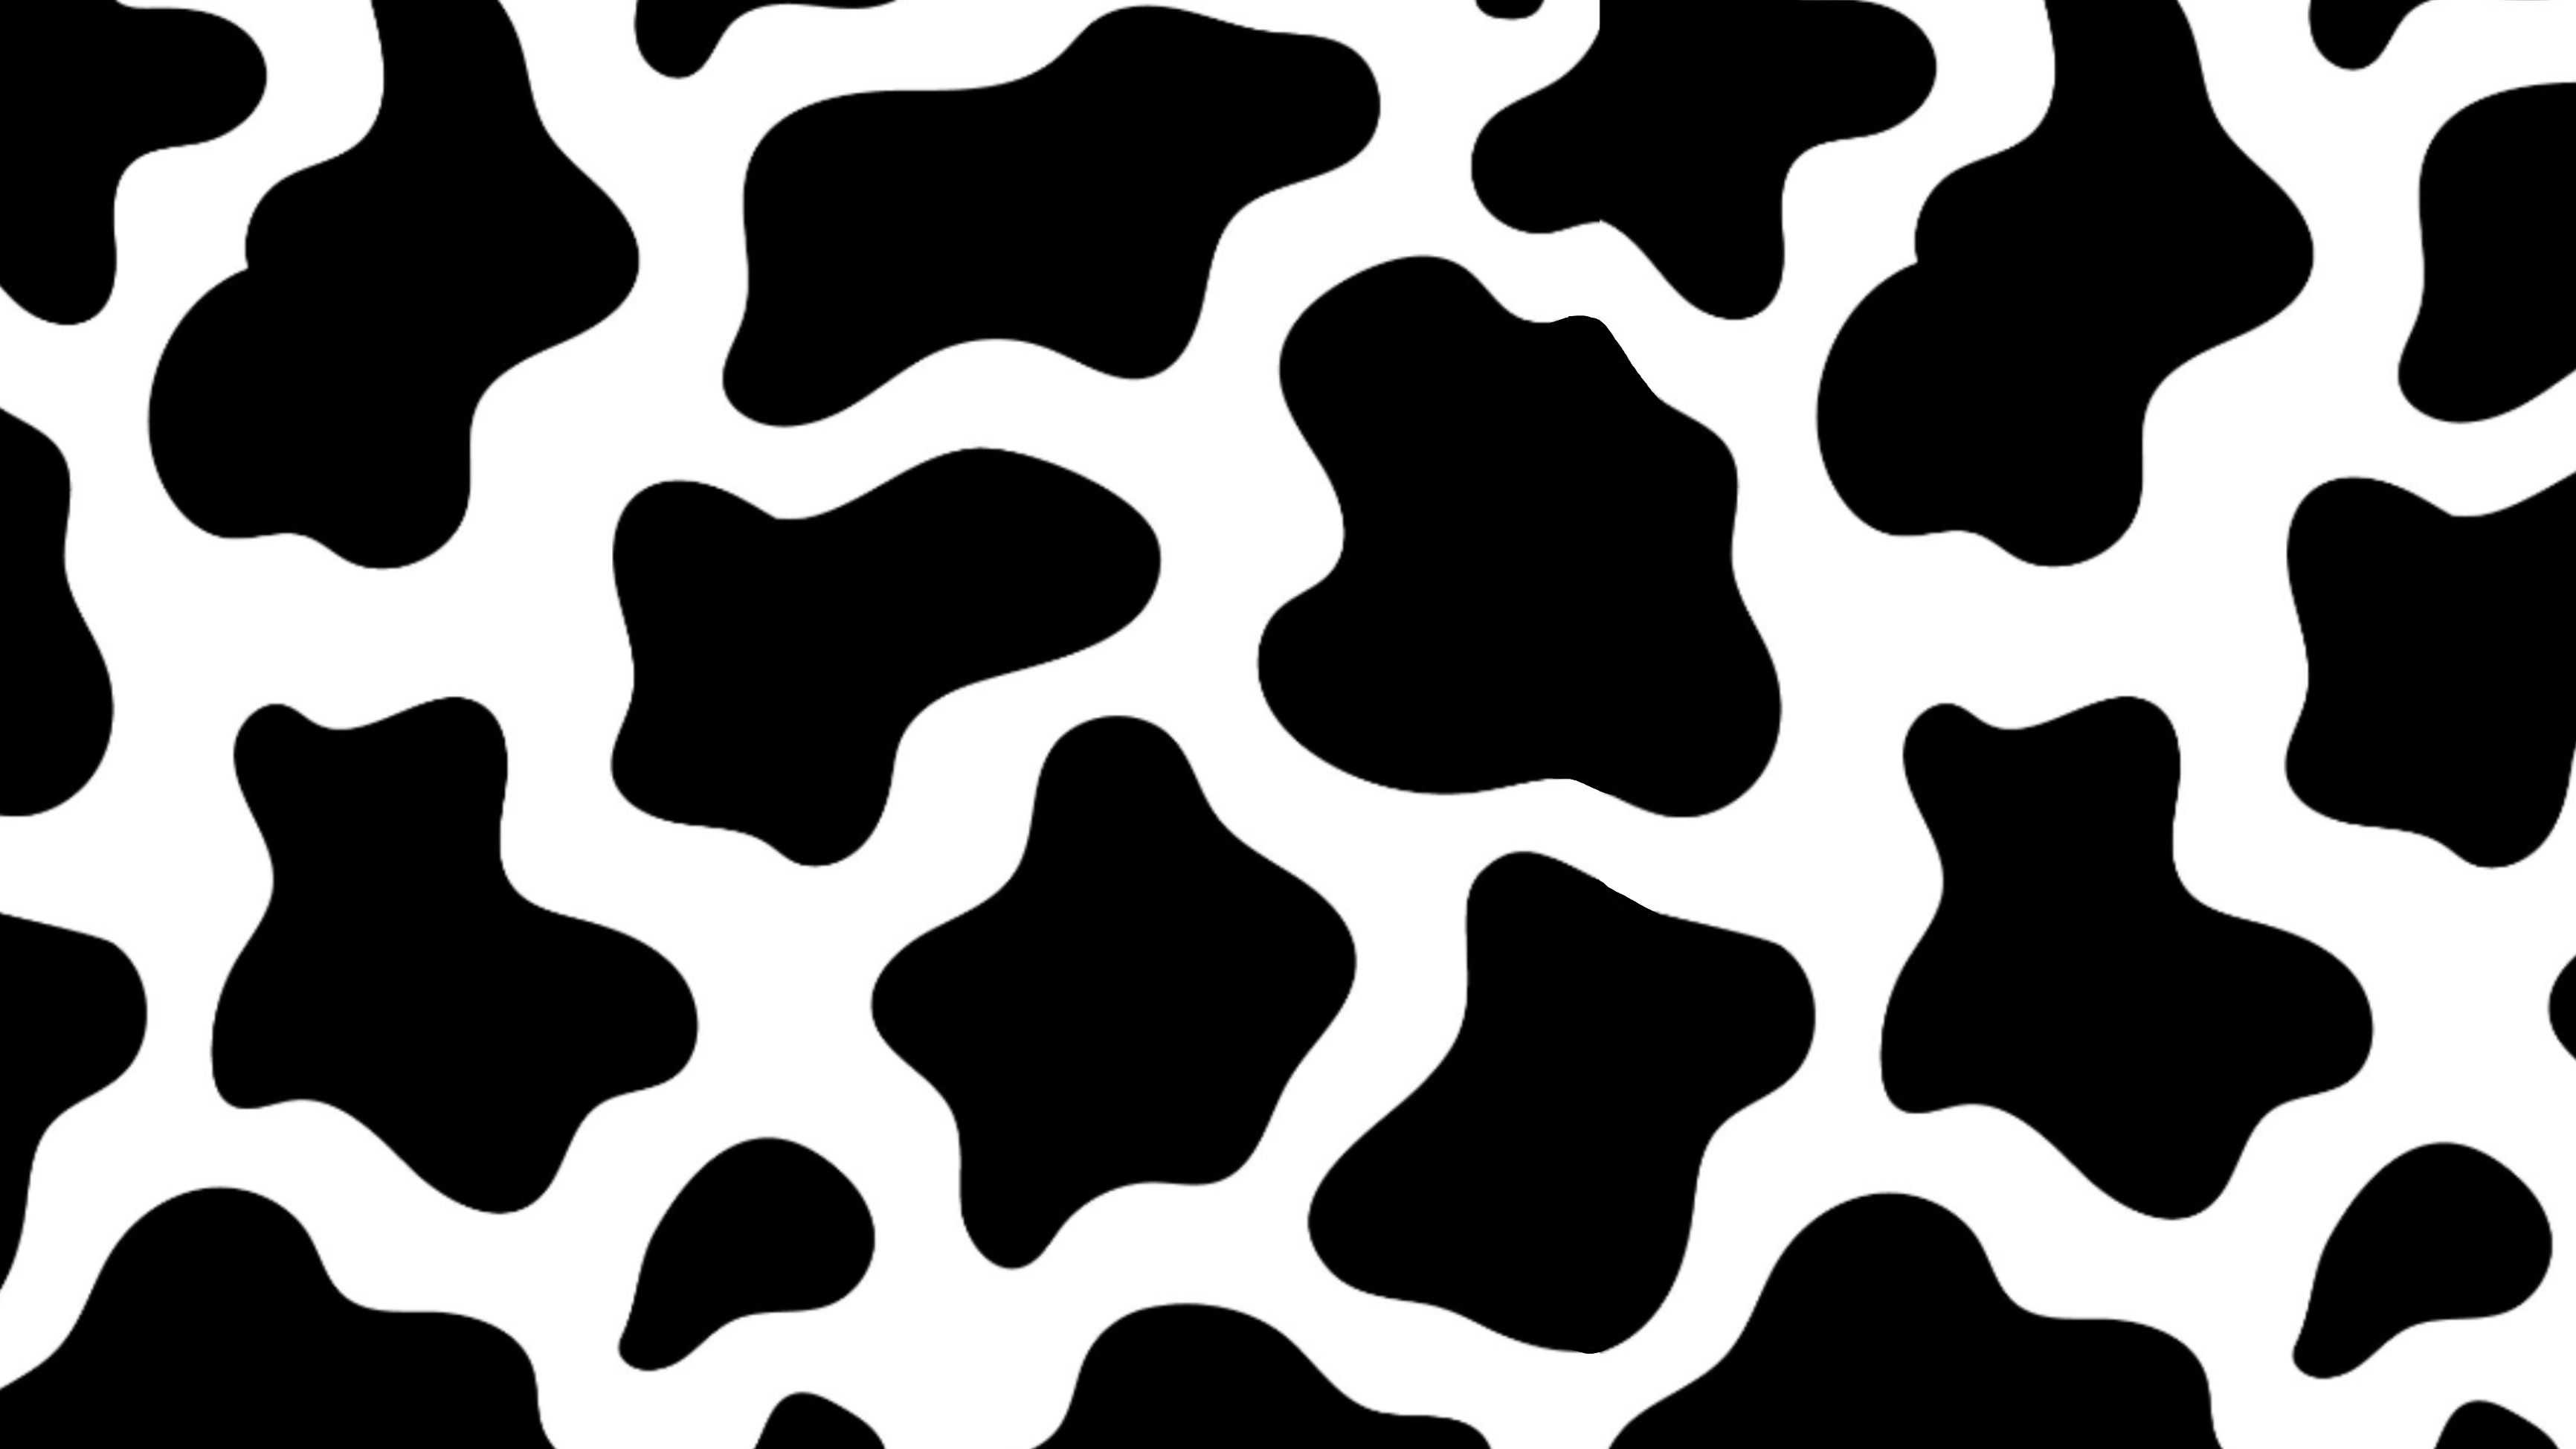 Cow Prints Wallpapers - Wallpaper Cave.